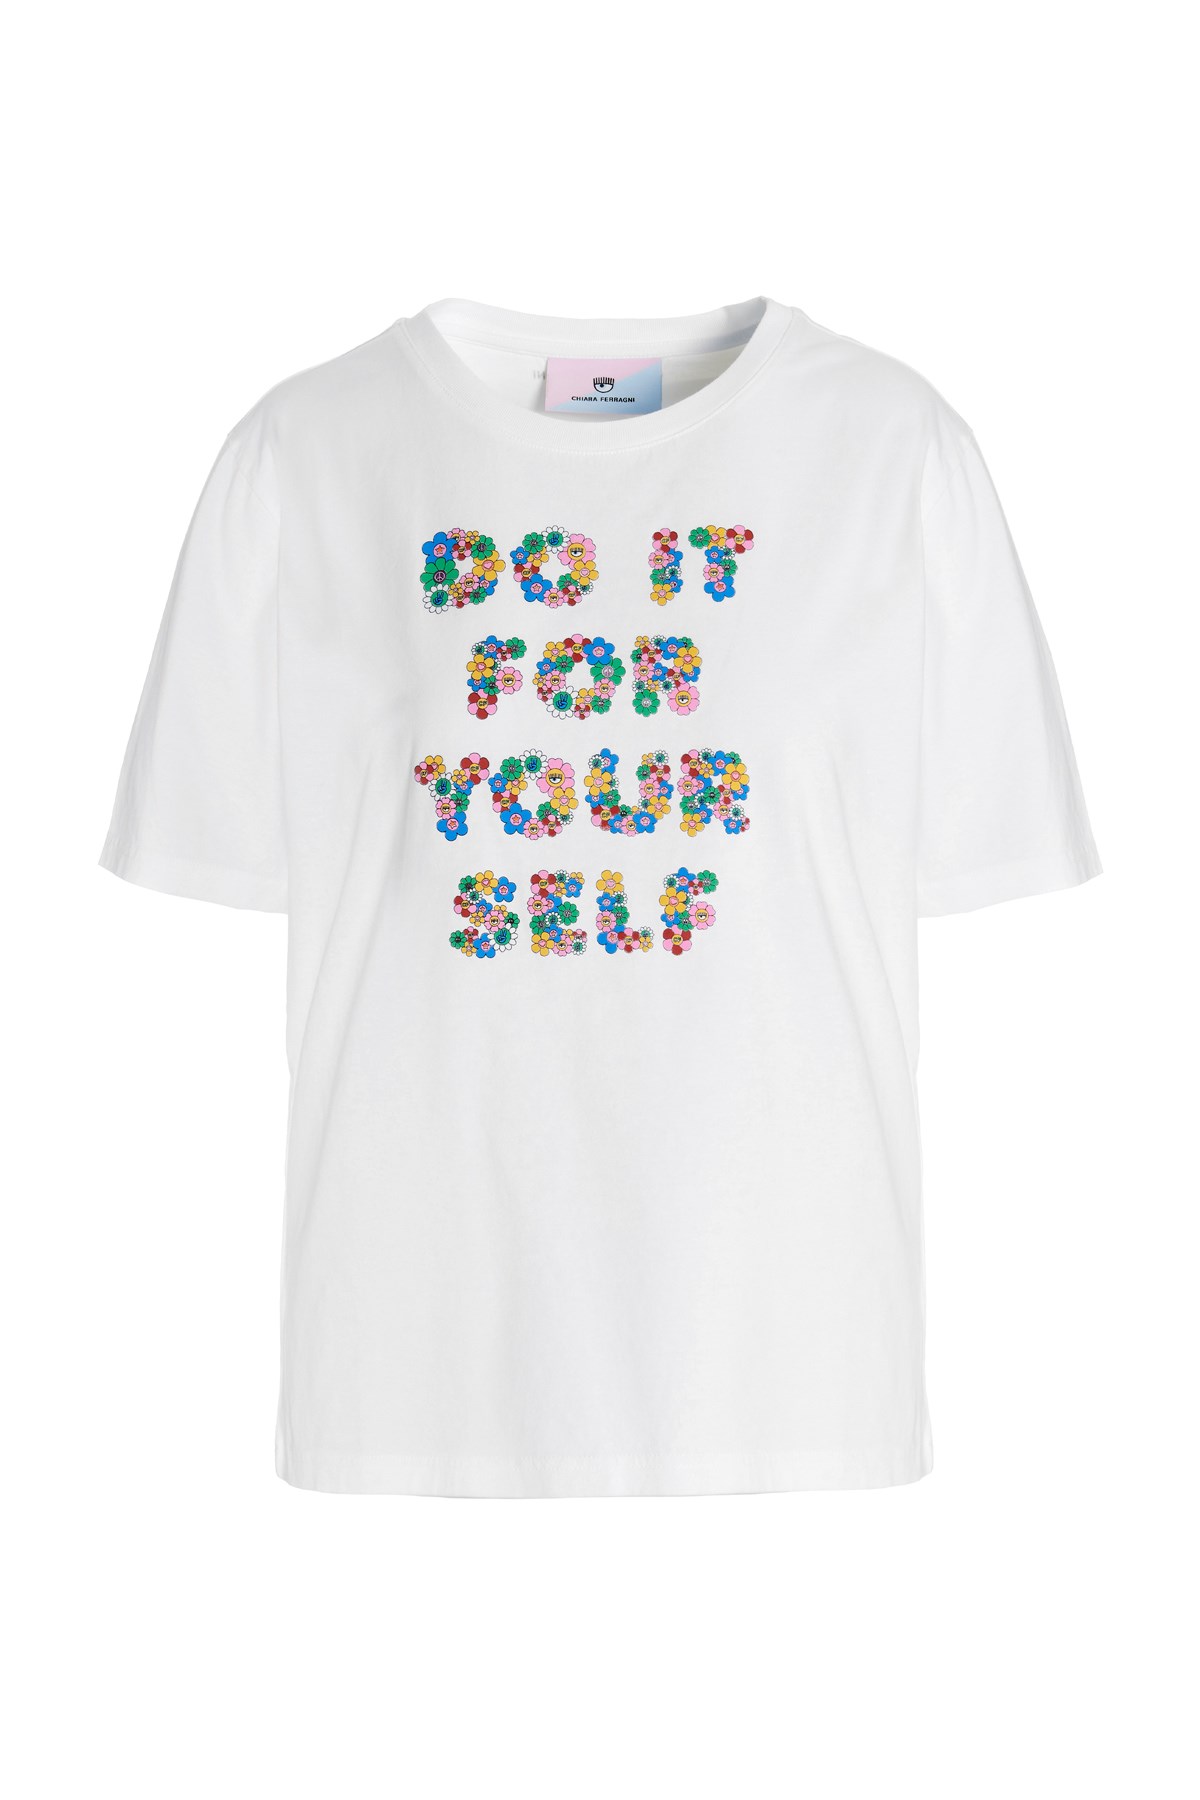 CHIARA FERRAGNI BRAND 'Your Self’ T-Shirt